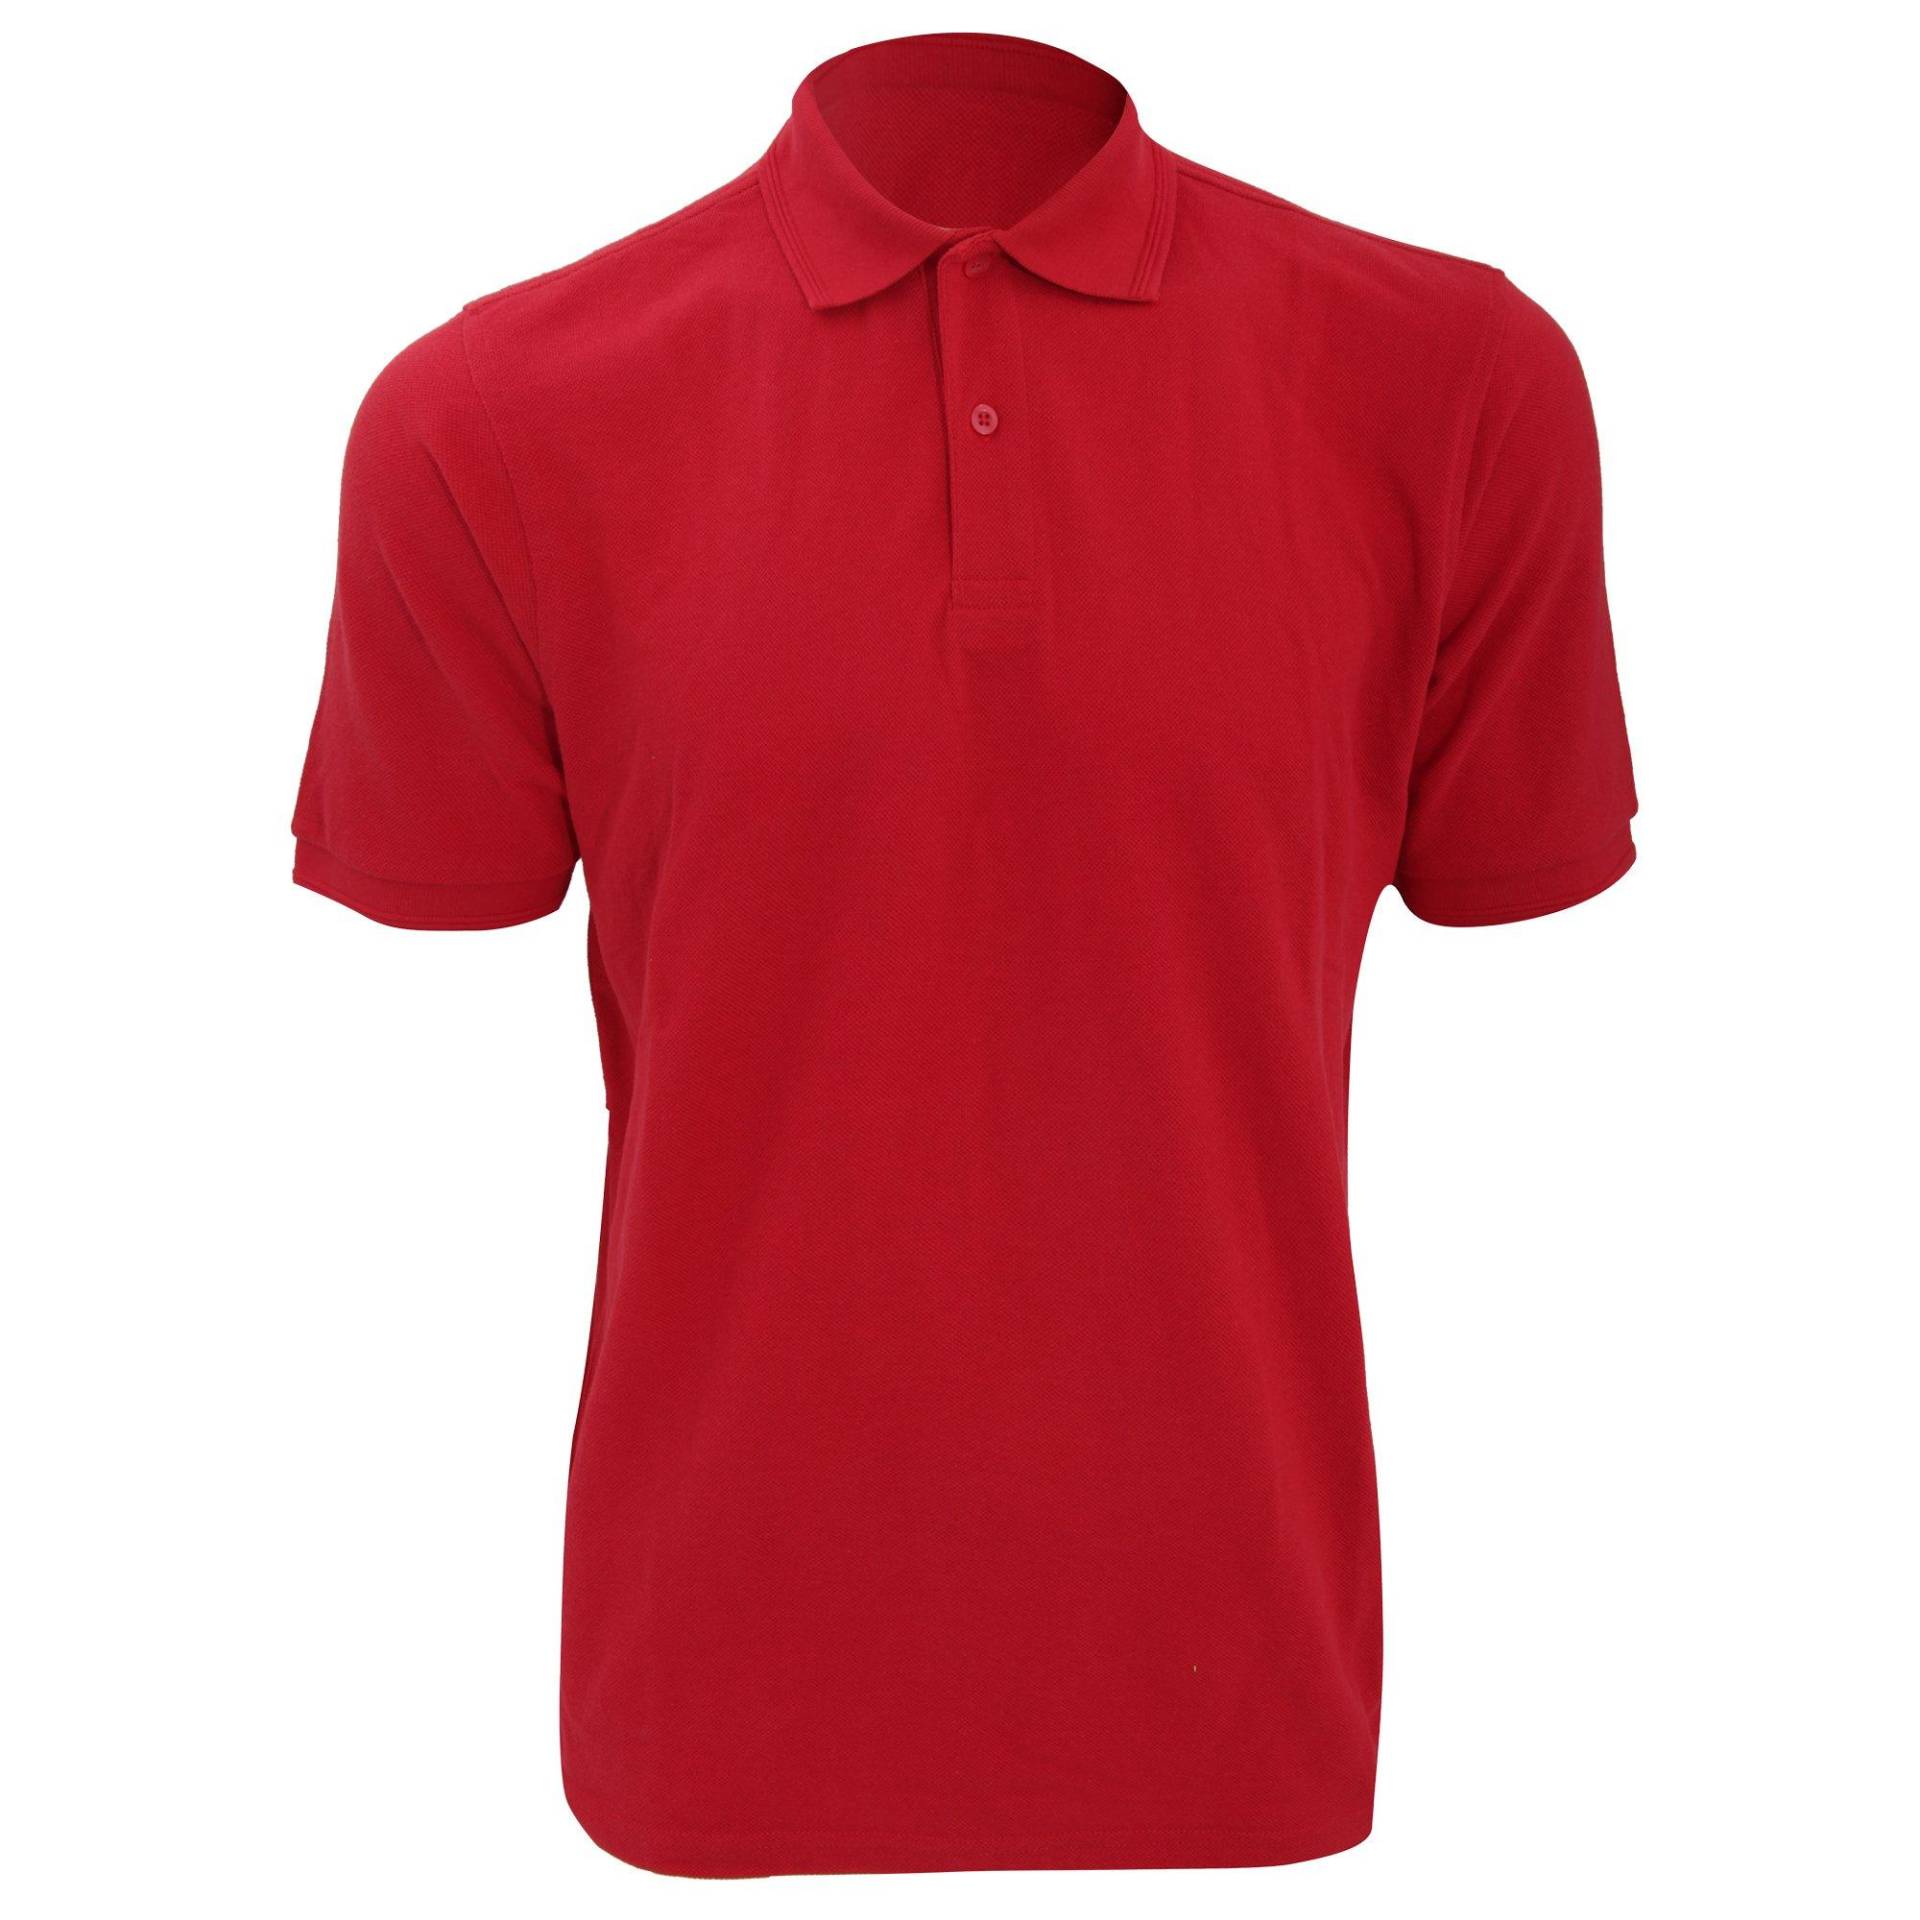 Ripple Collar & Cuff Kurzarm Polo Shirt Herren Rot Bunt 4XL von Russell